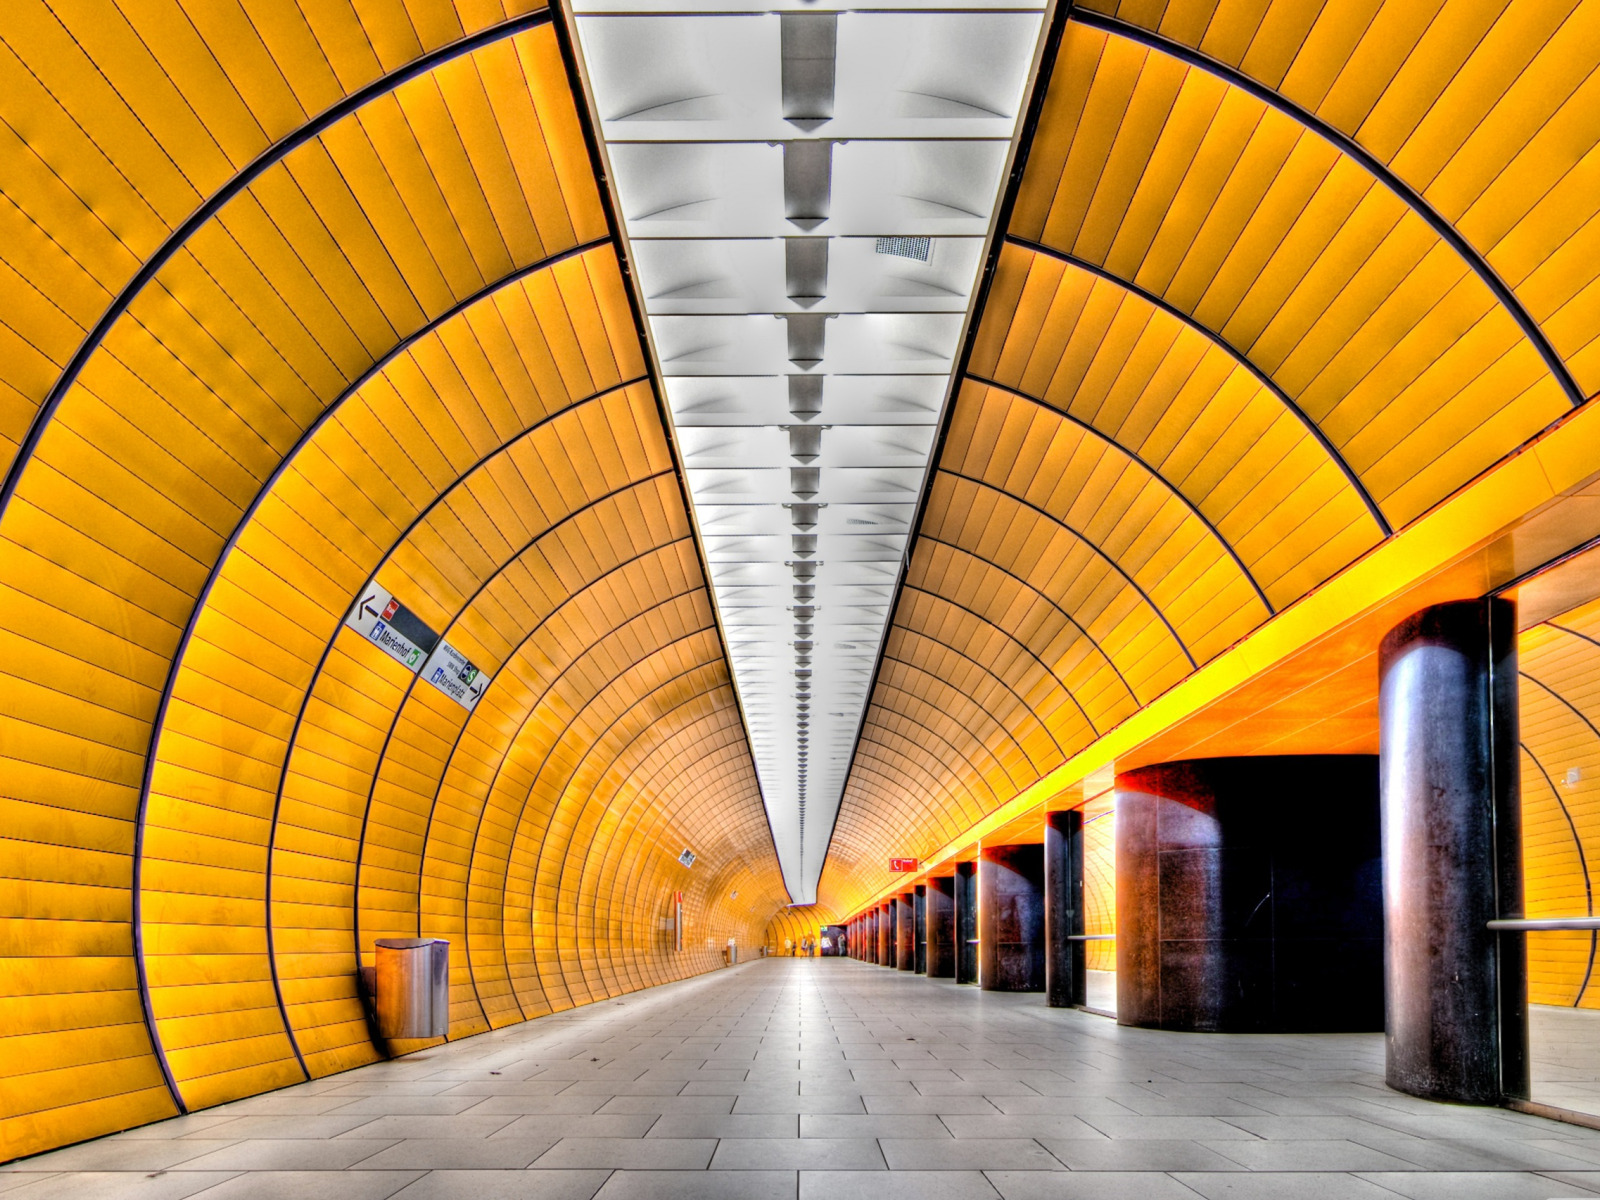 метро мюнхена